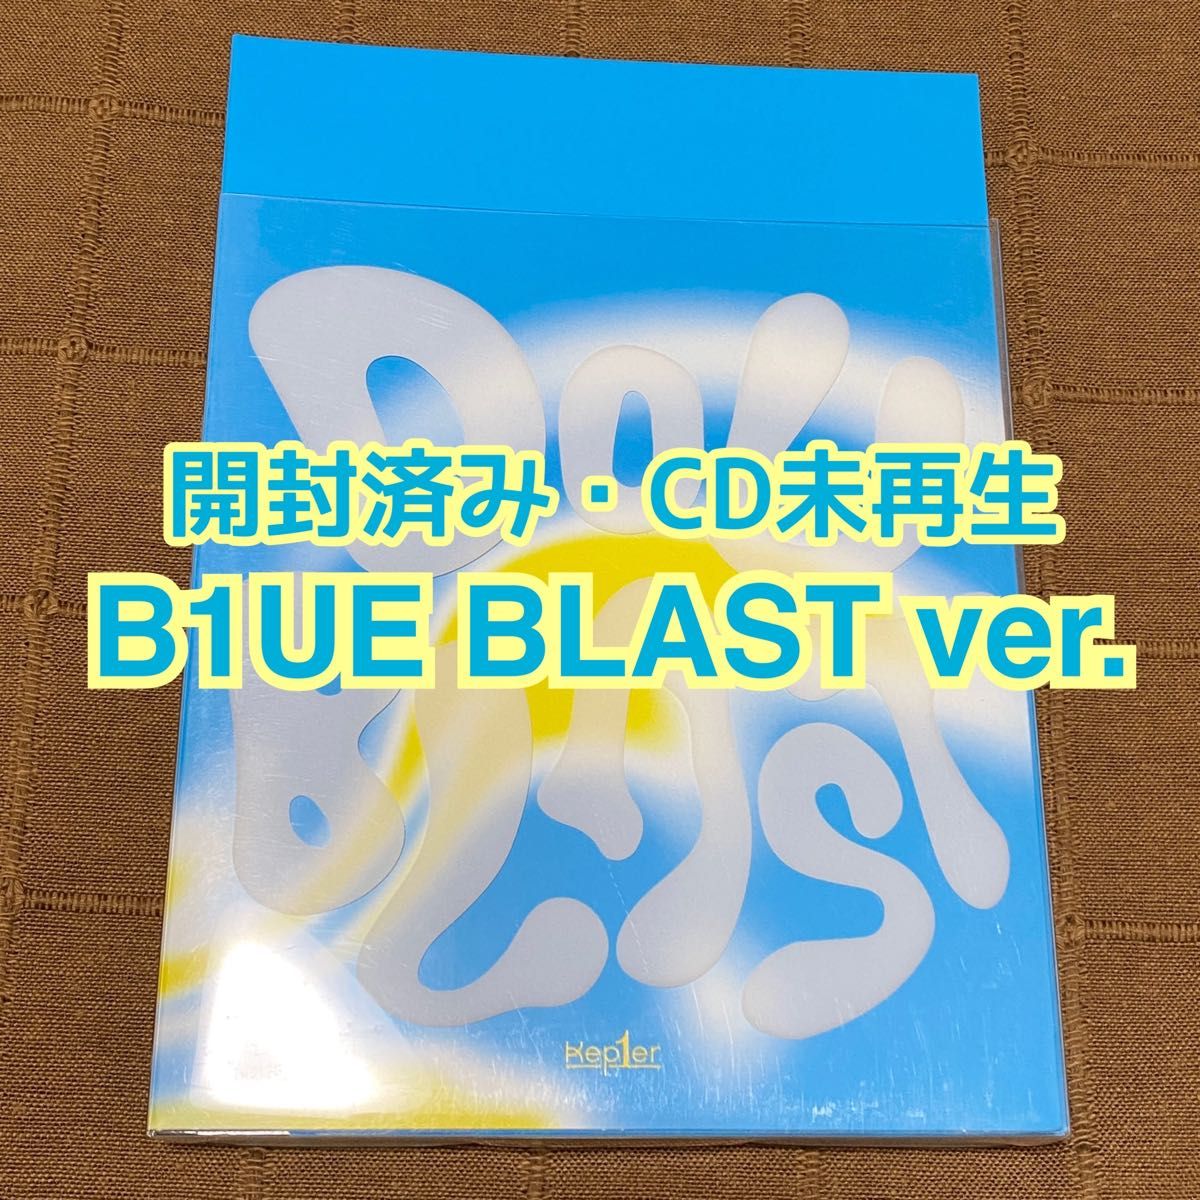 Kep1er DOUBLAST アルバム CD 開封済み B1UE BLAST